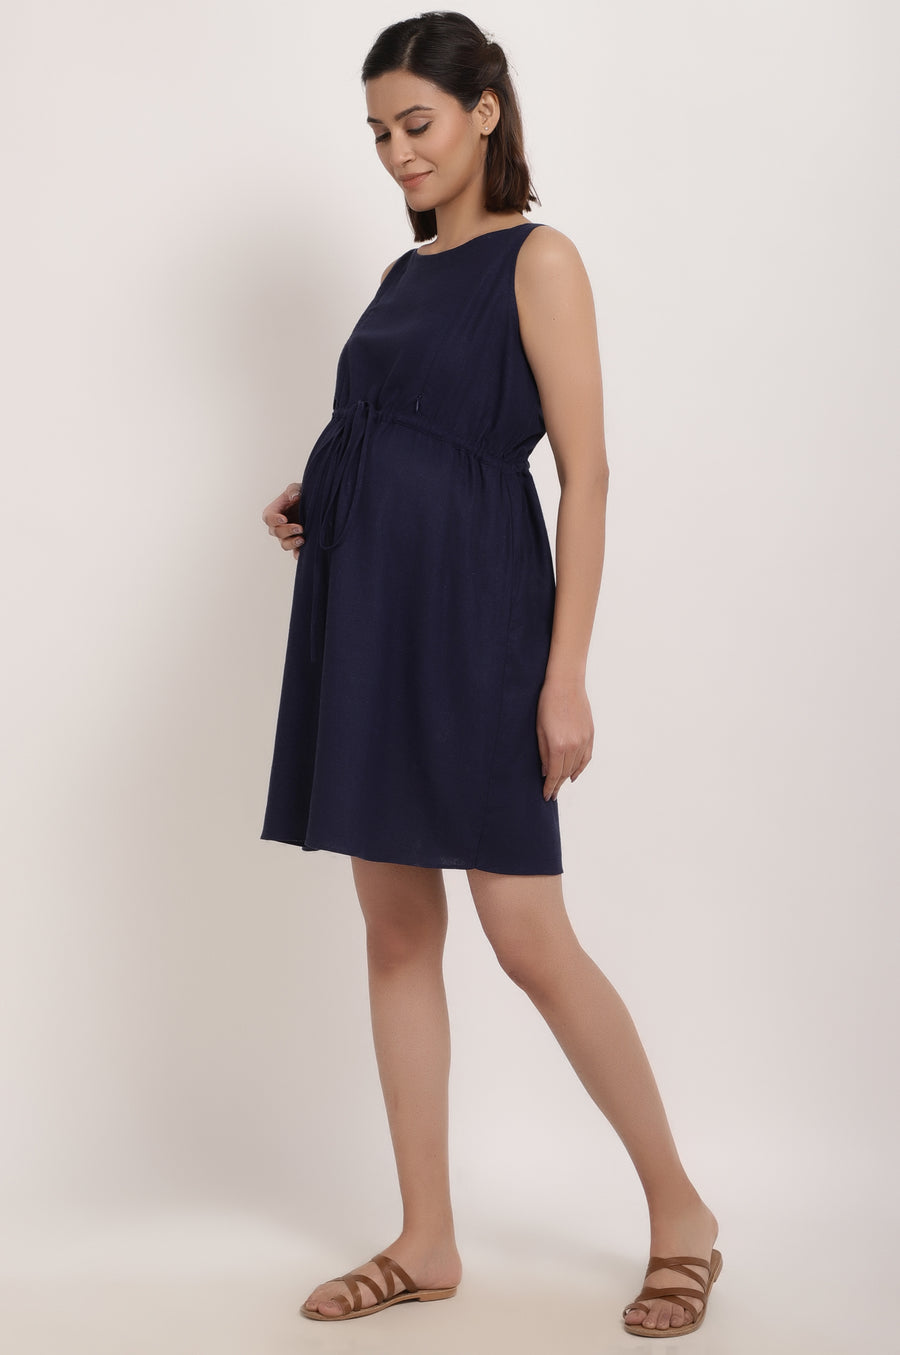 stylish maternity wear online